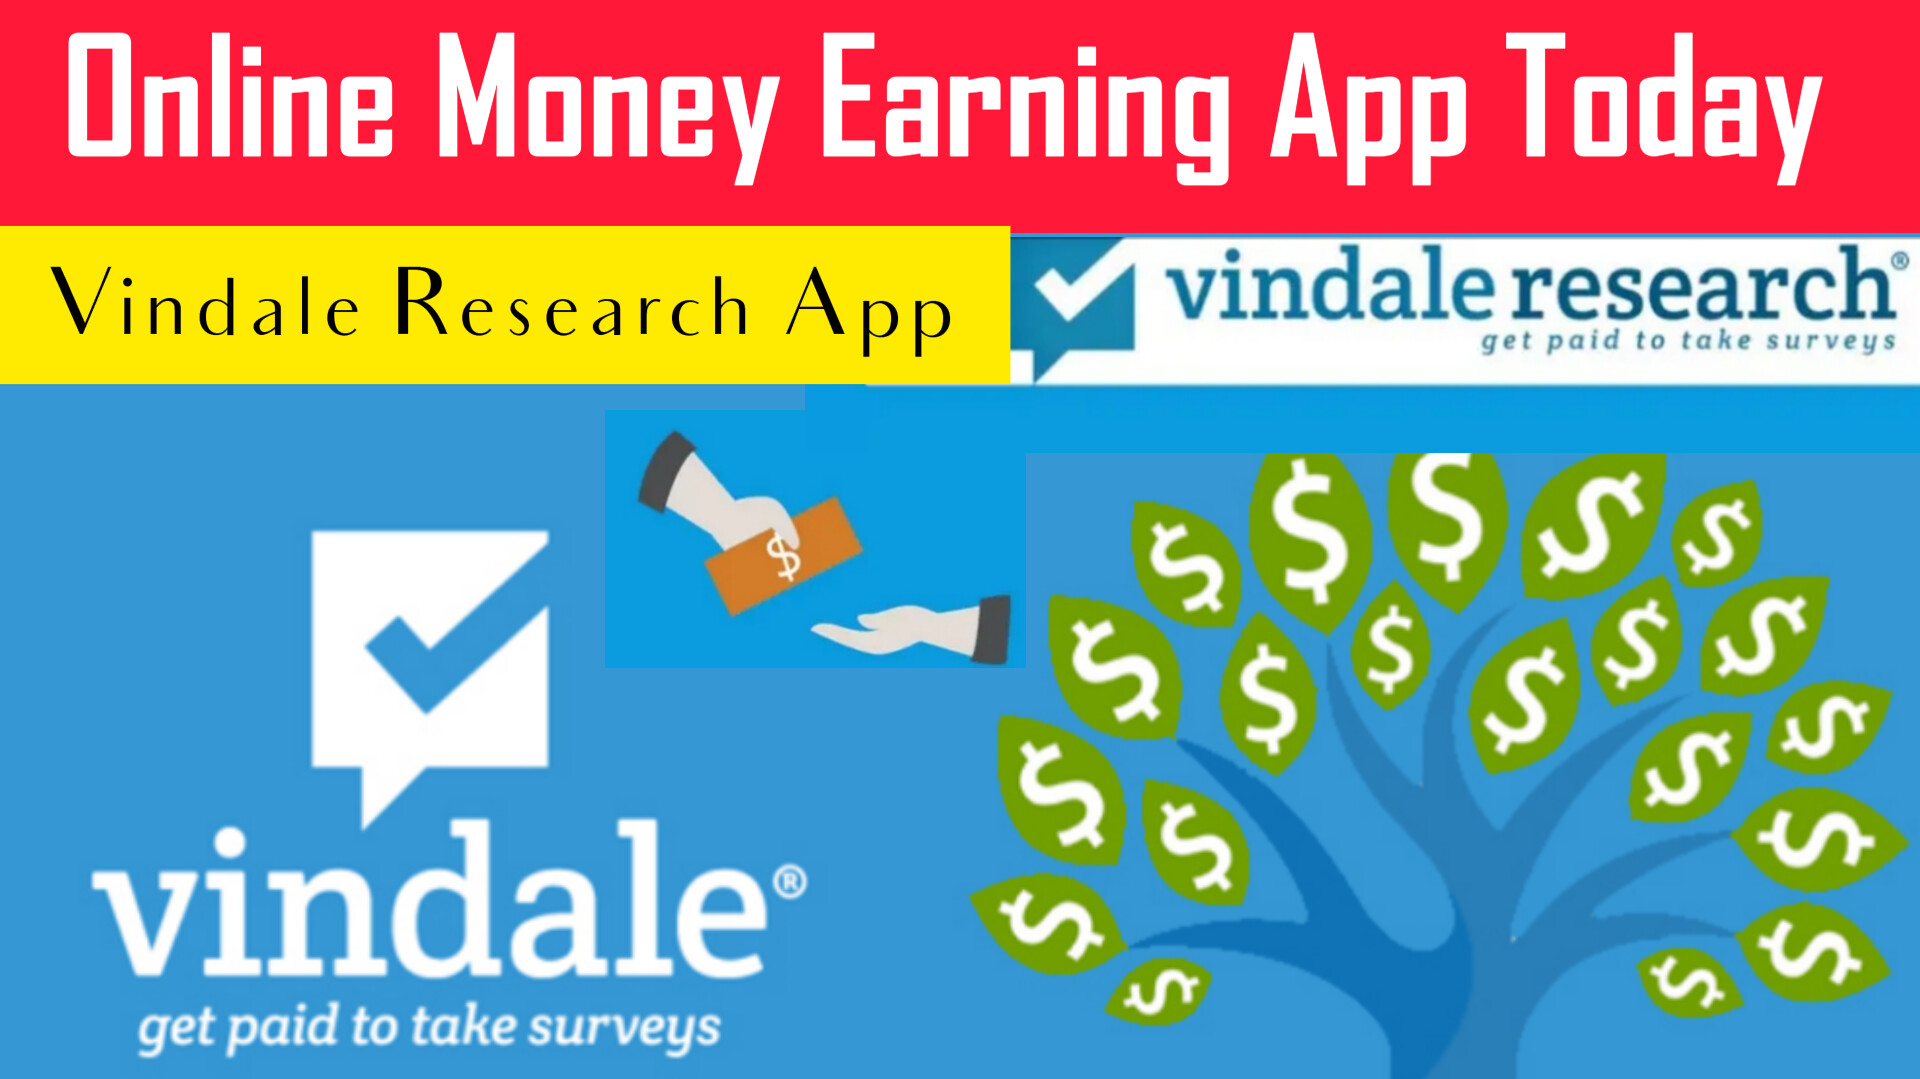 New Earning App Today | Vindale Research App | Online Earning App